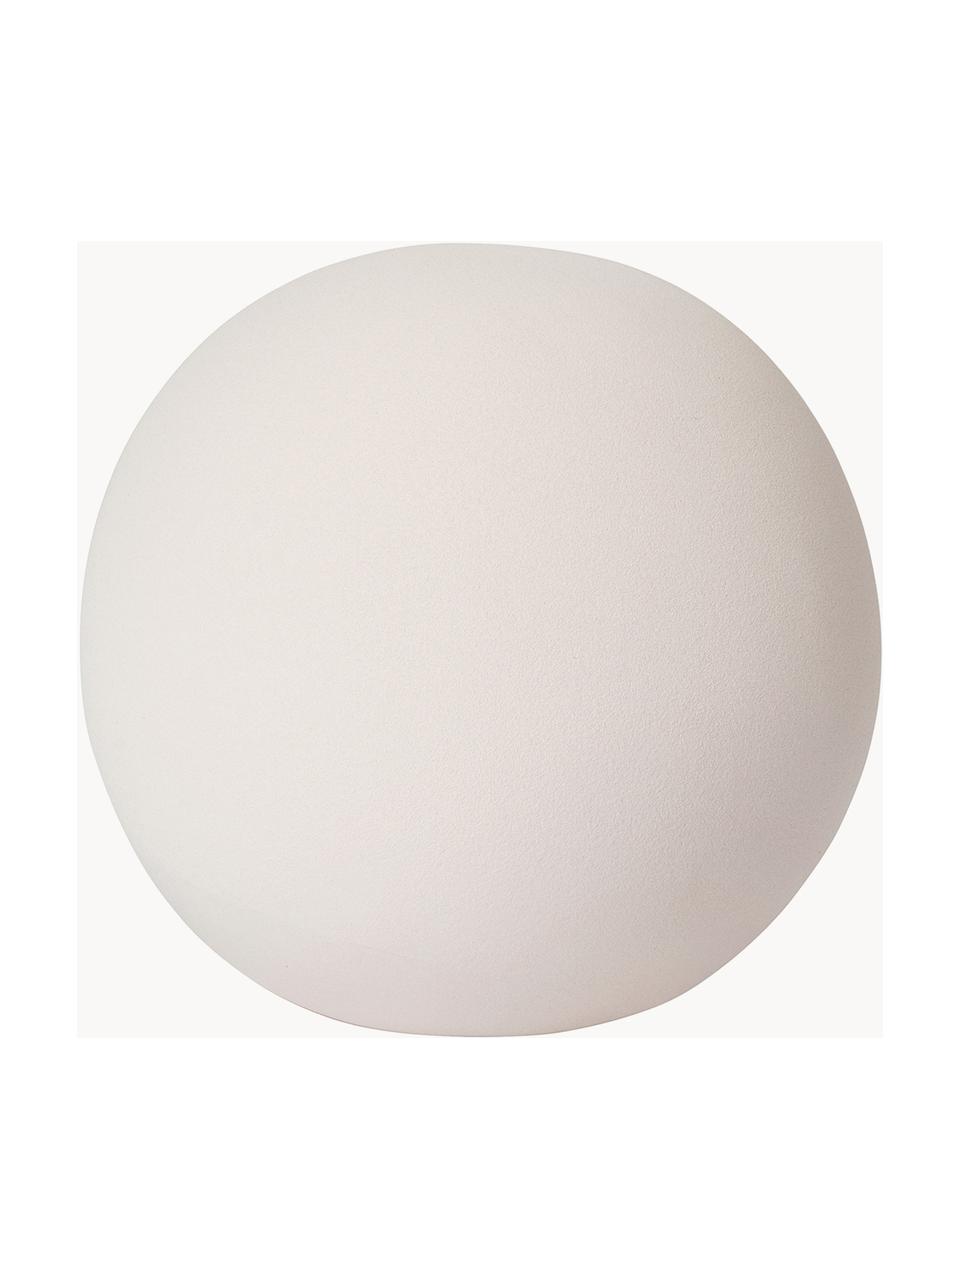 Oggetto decorativo Globe, Terracotta, Bianco latteo, Ø 18 x Alt. 17 cm